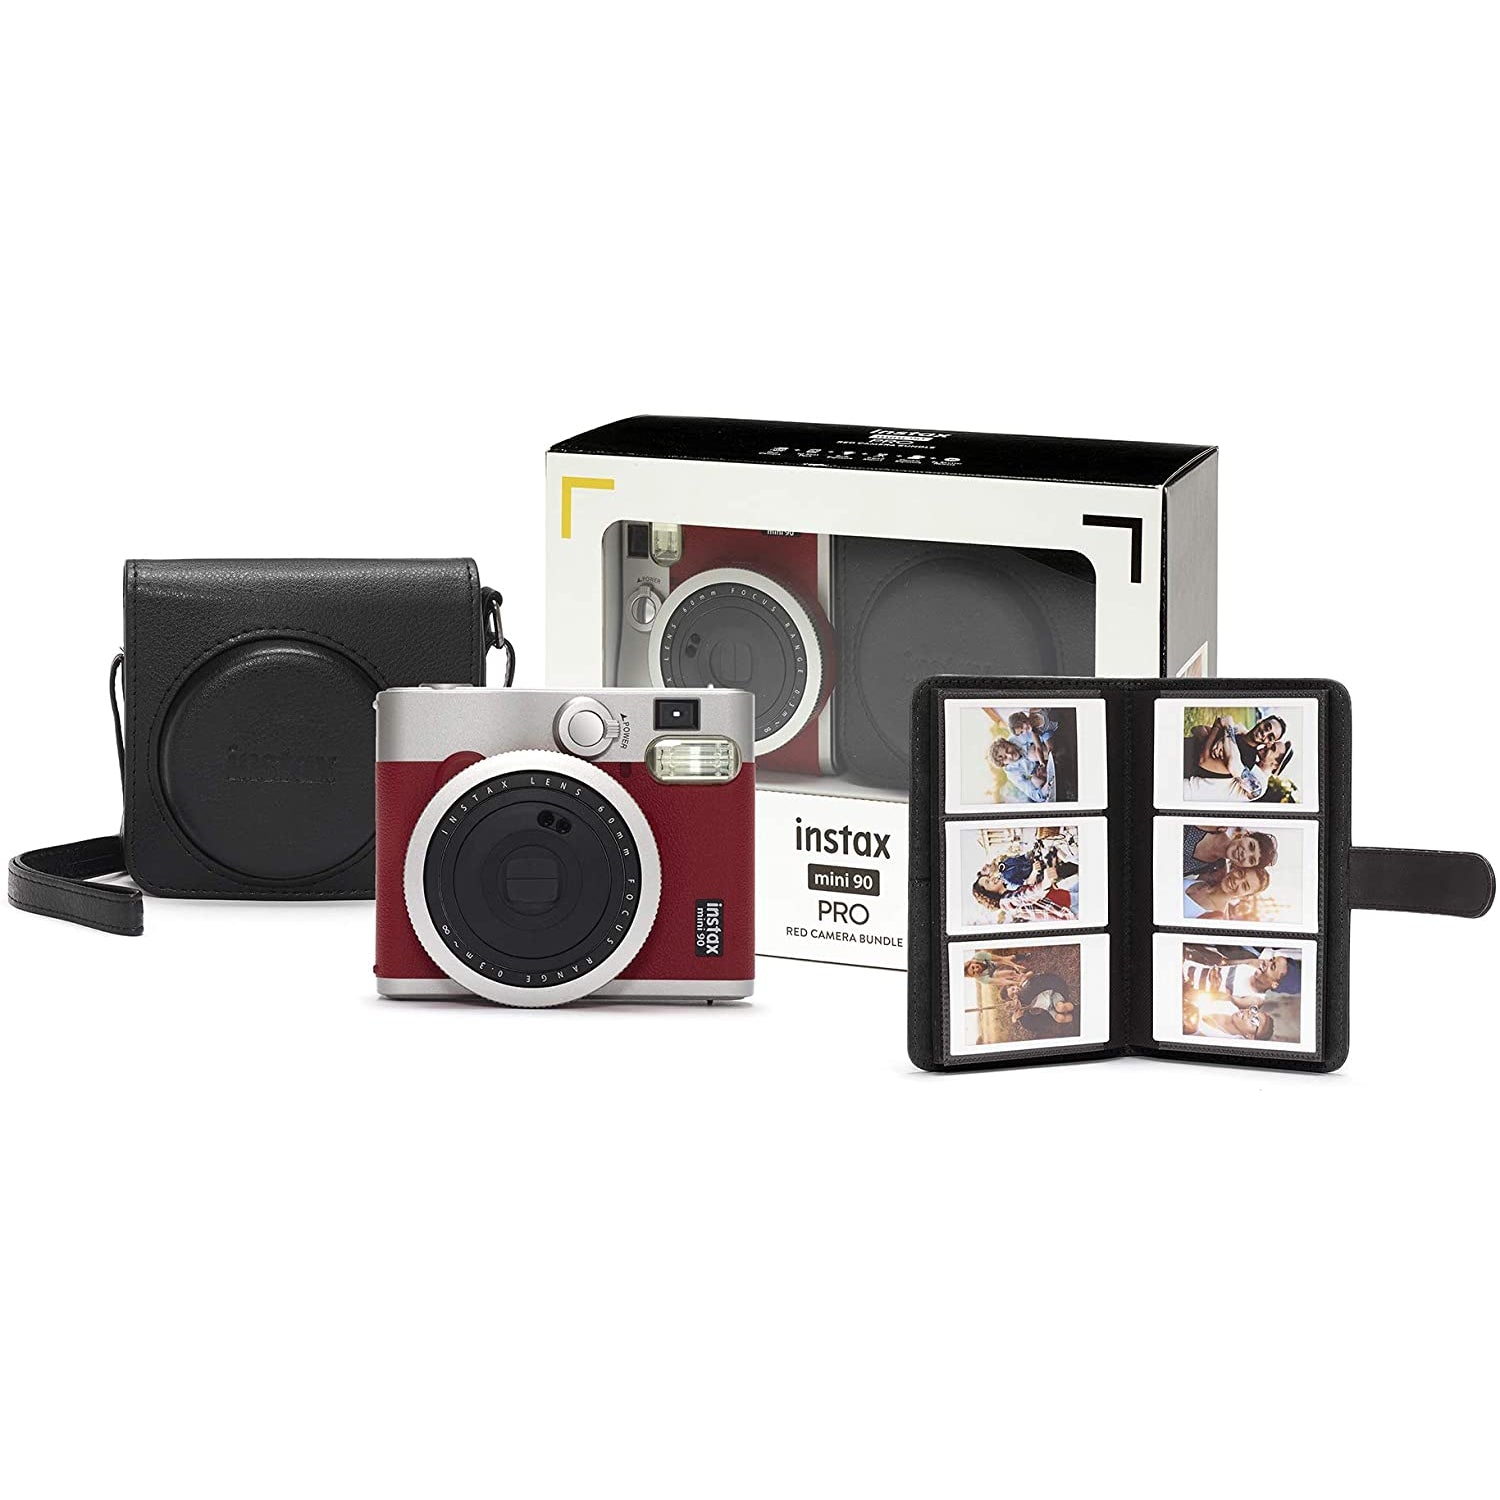 Fujifilm Instax Mini 90 Pro Red Camera Bundle